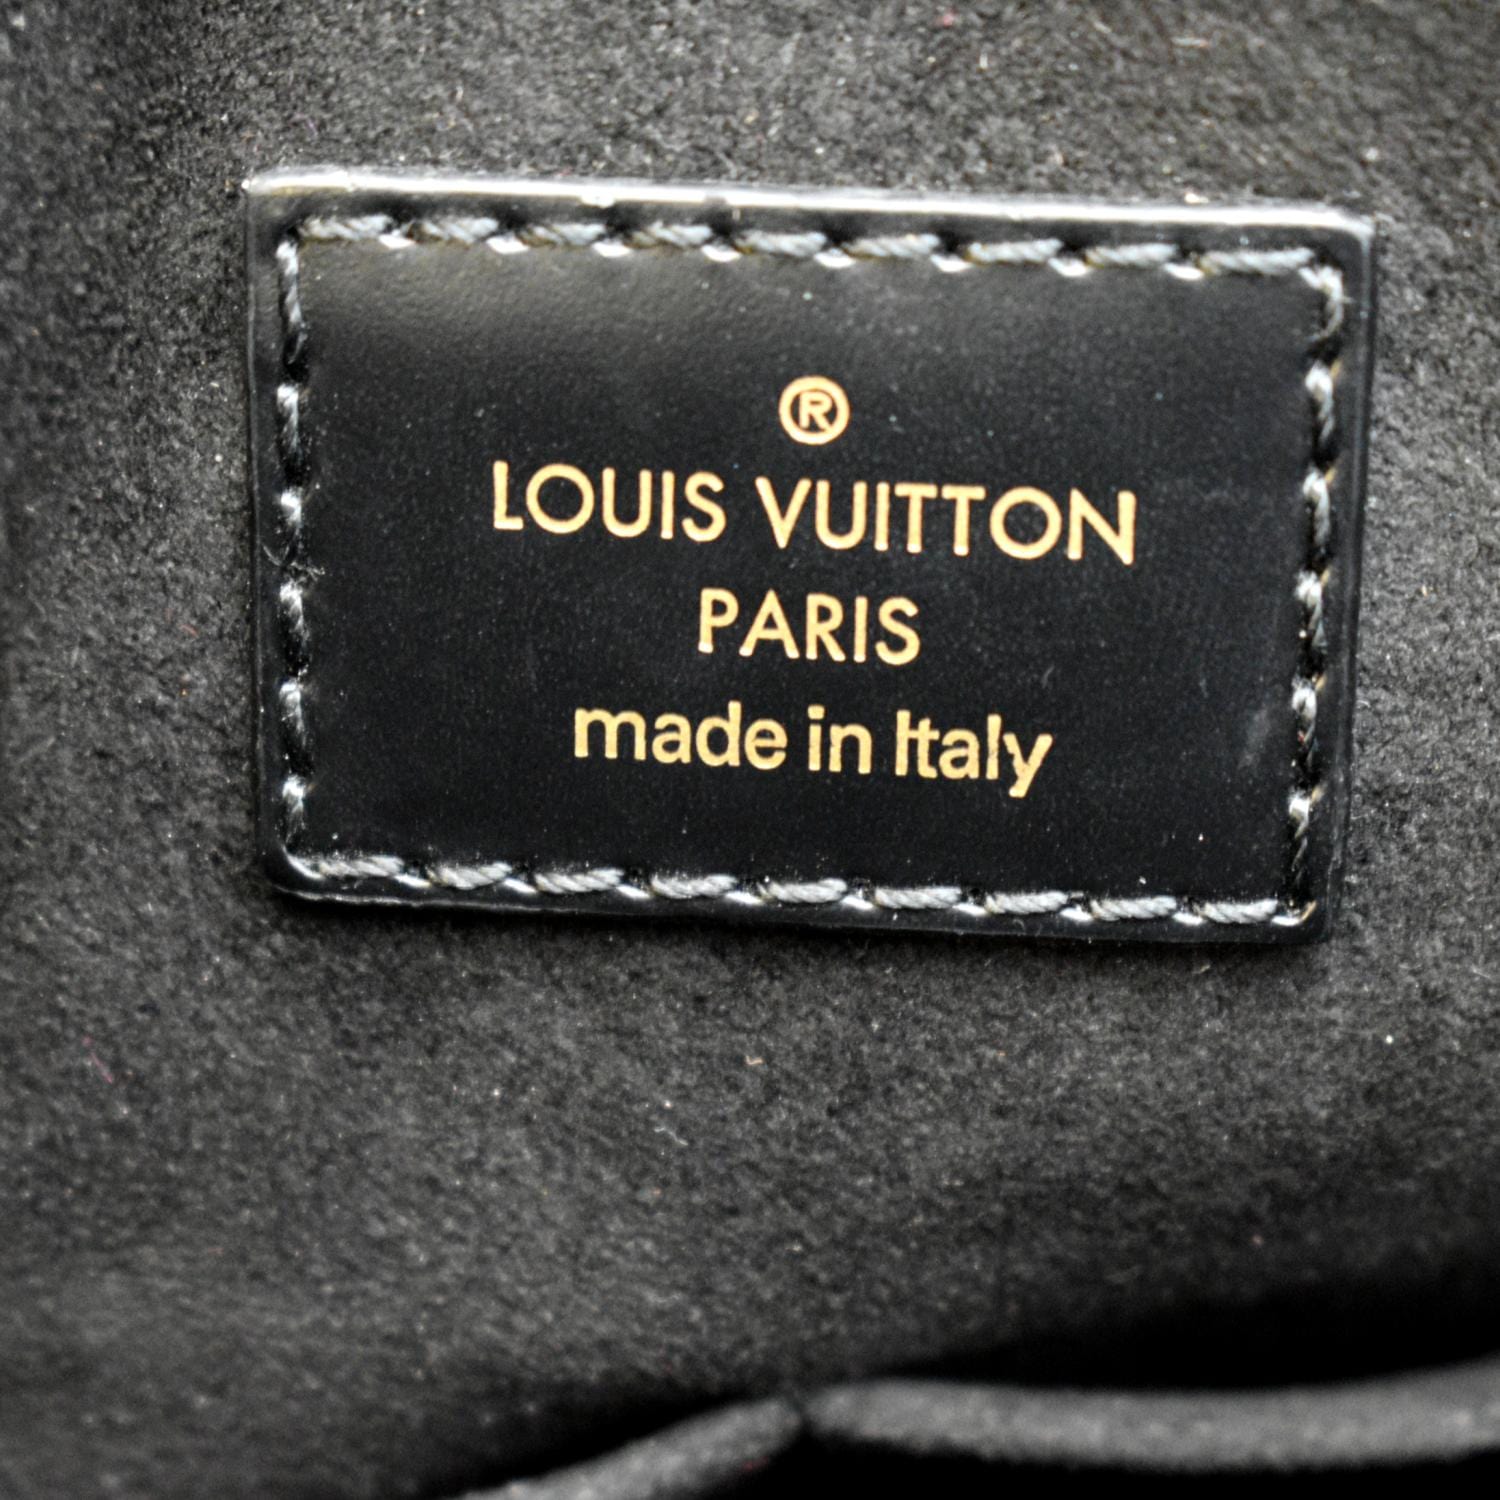 Louis Vuitton revs up with limited-edition Damier Cobalt Race